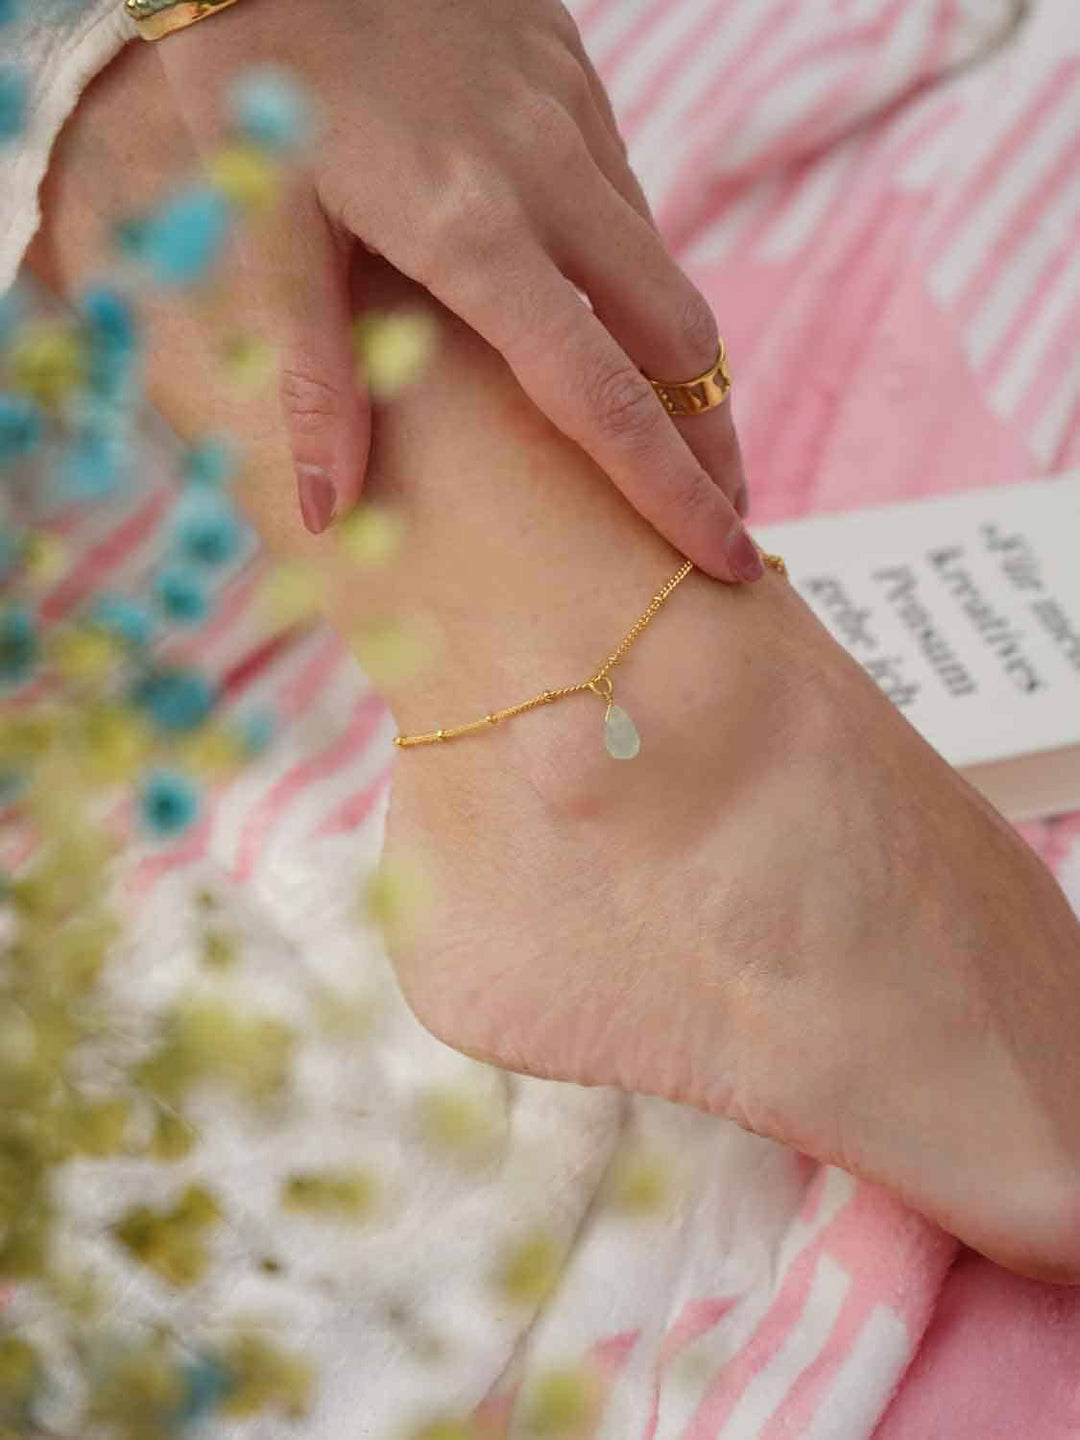 Personalized Anklet (waterproof) - Kira